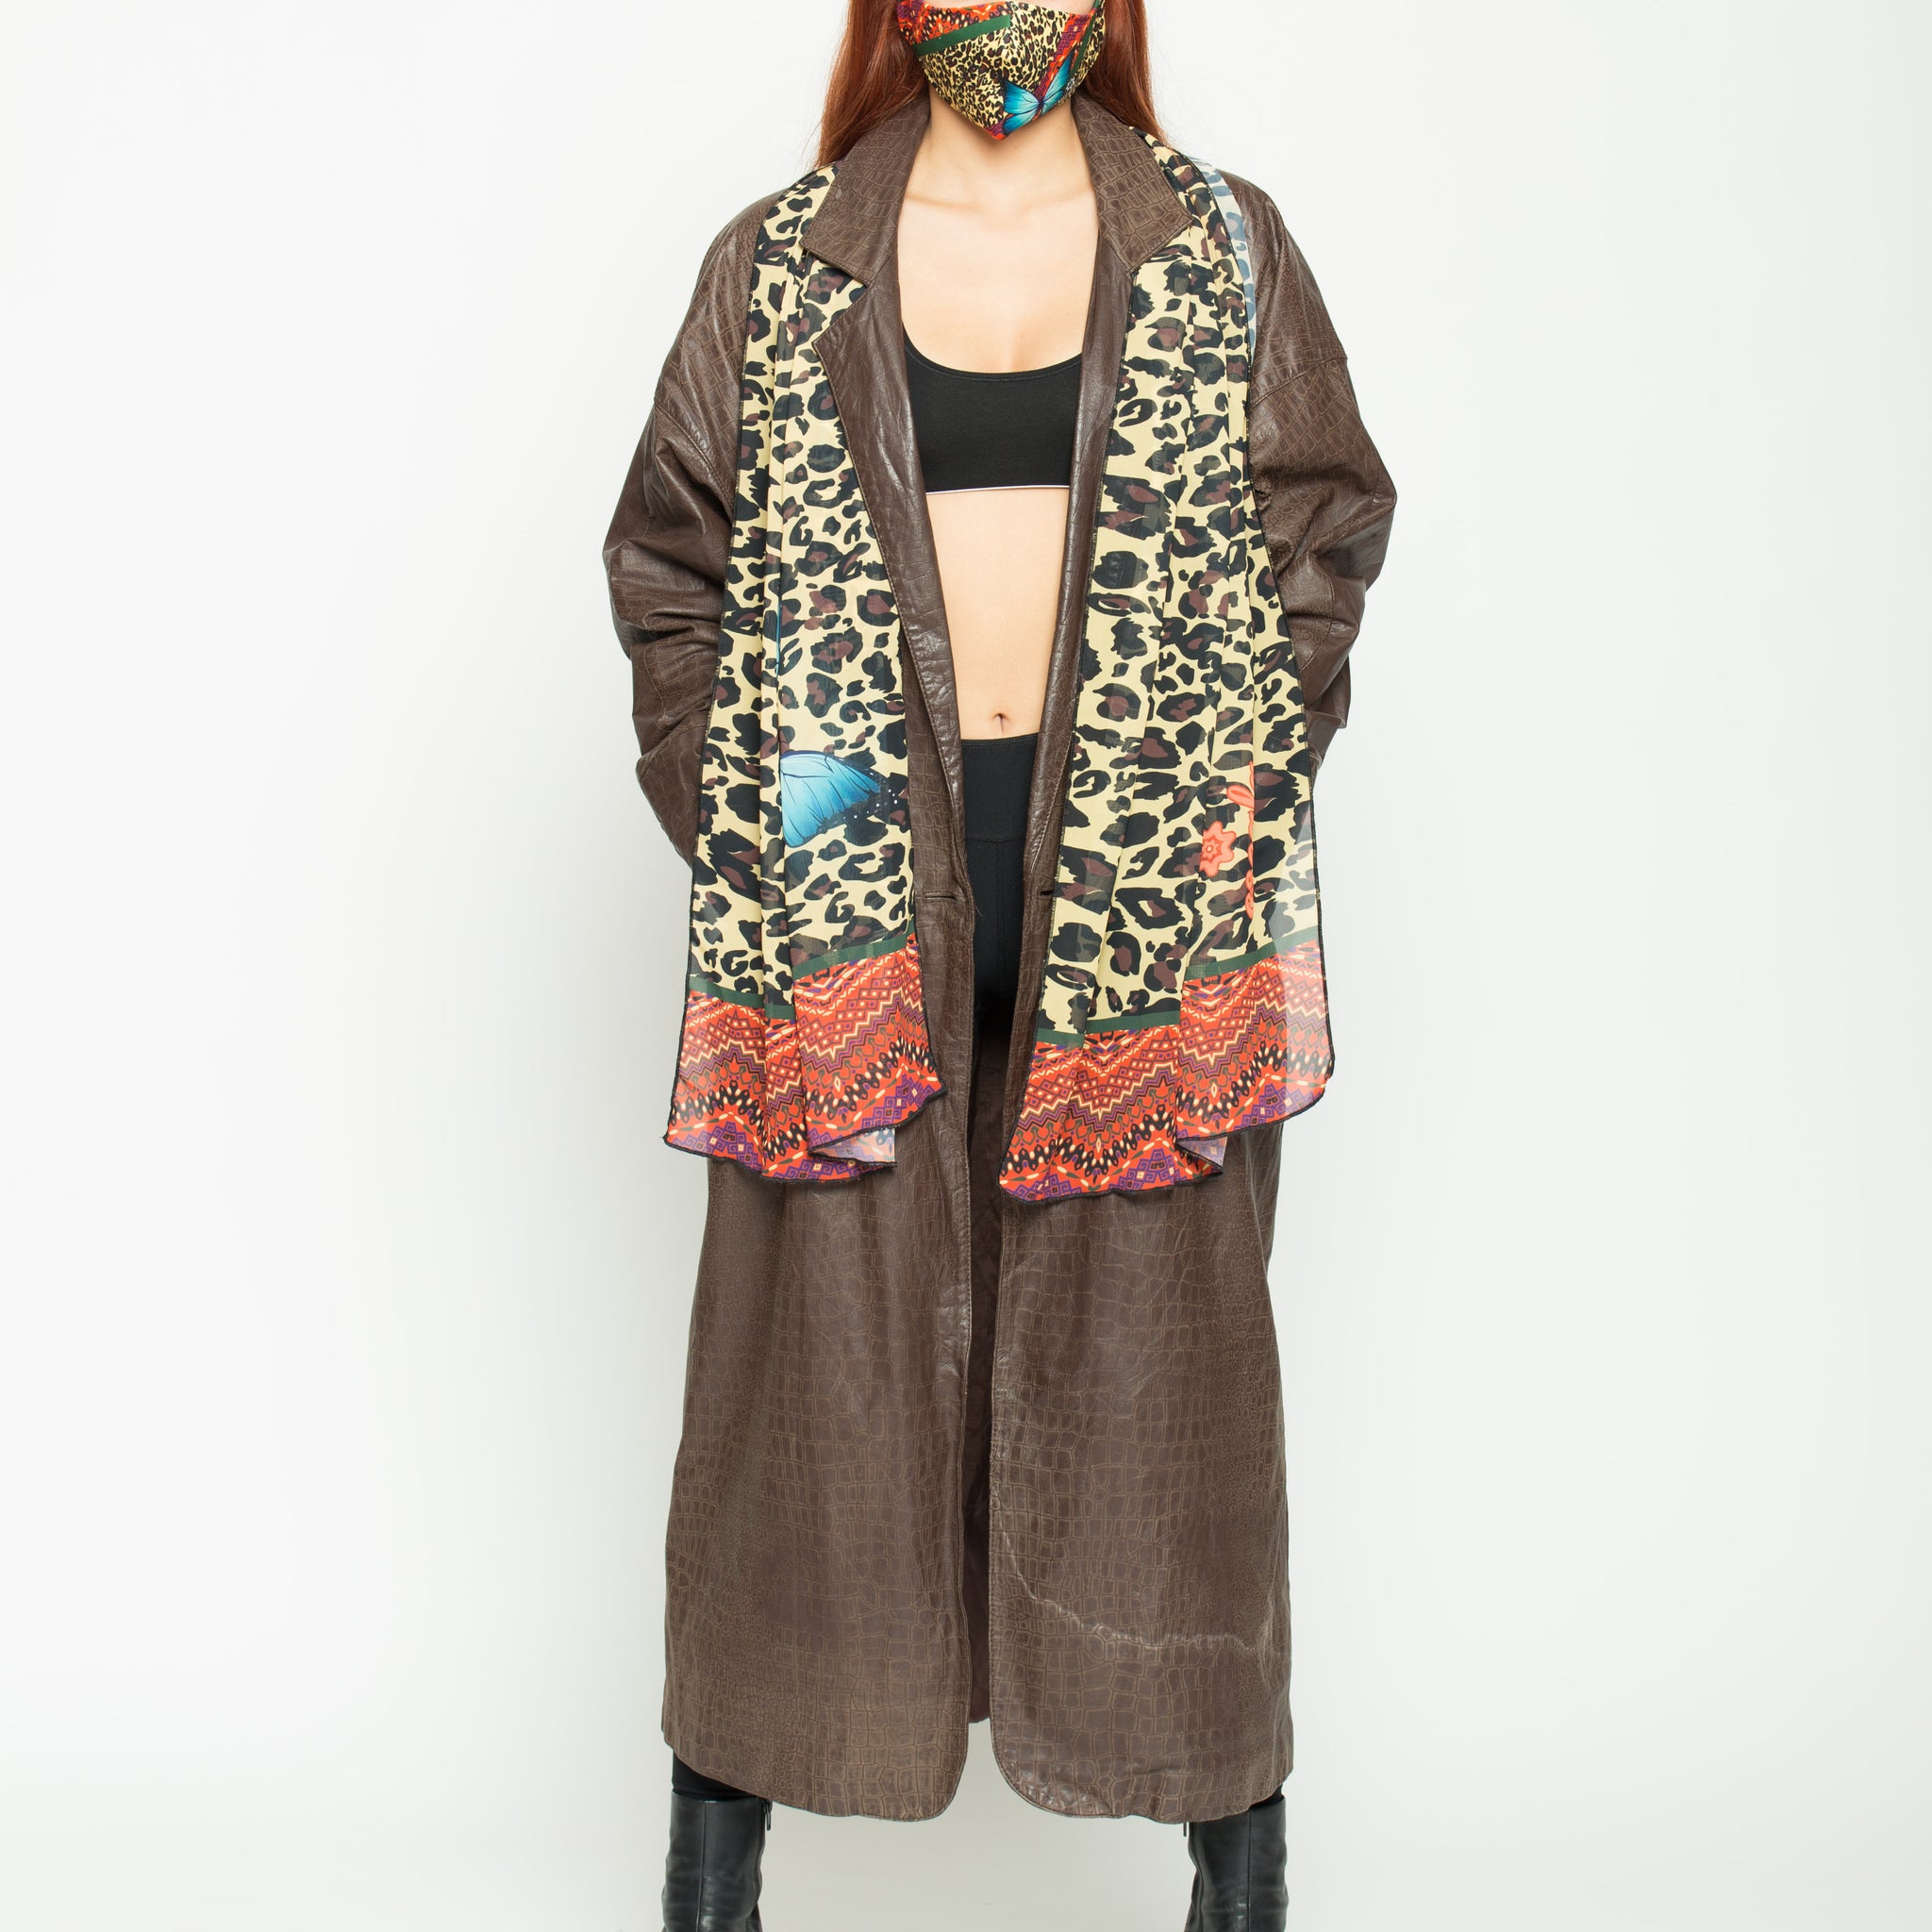 Colorful Cheetah Scarf and Face Mask Set - Escala Activewear